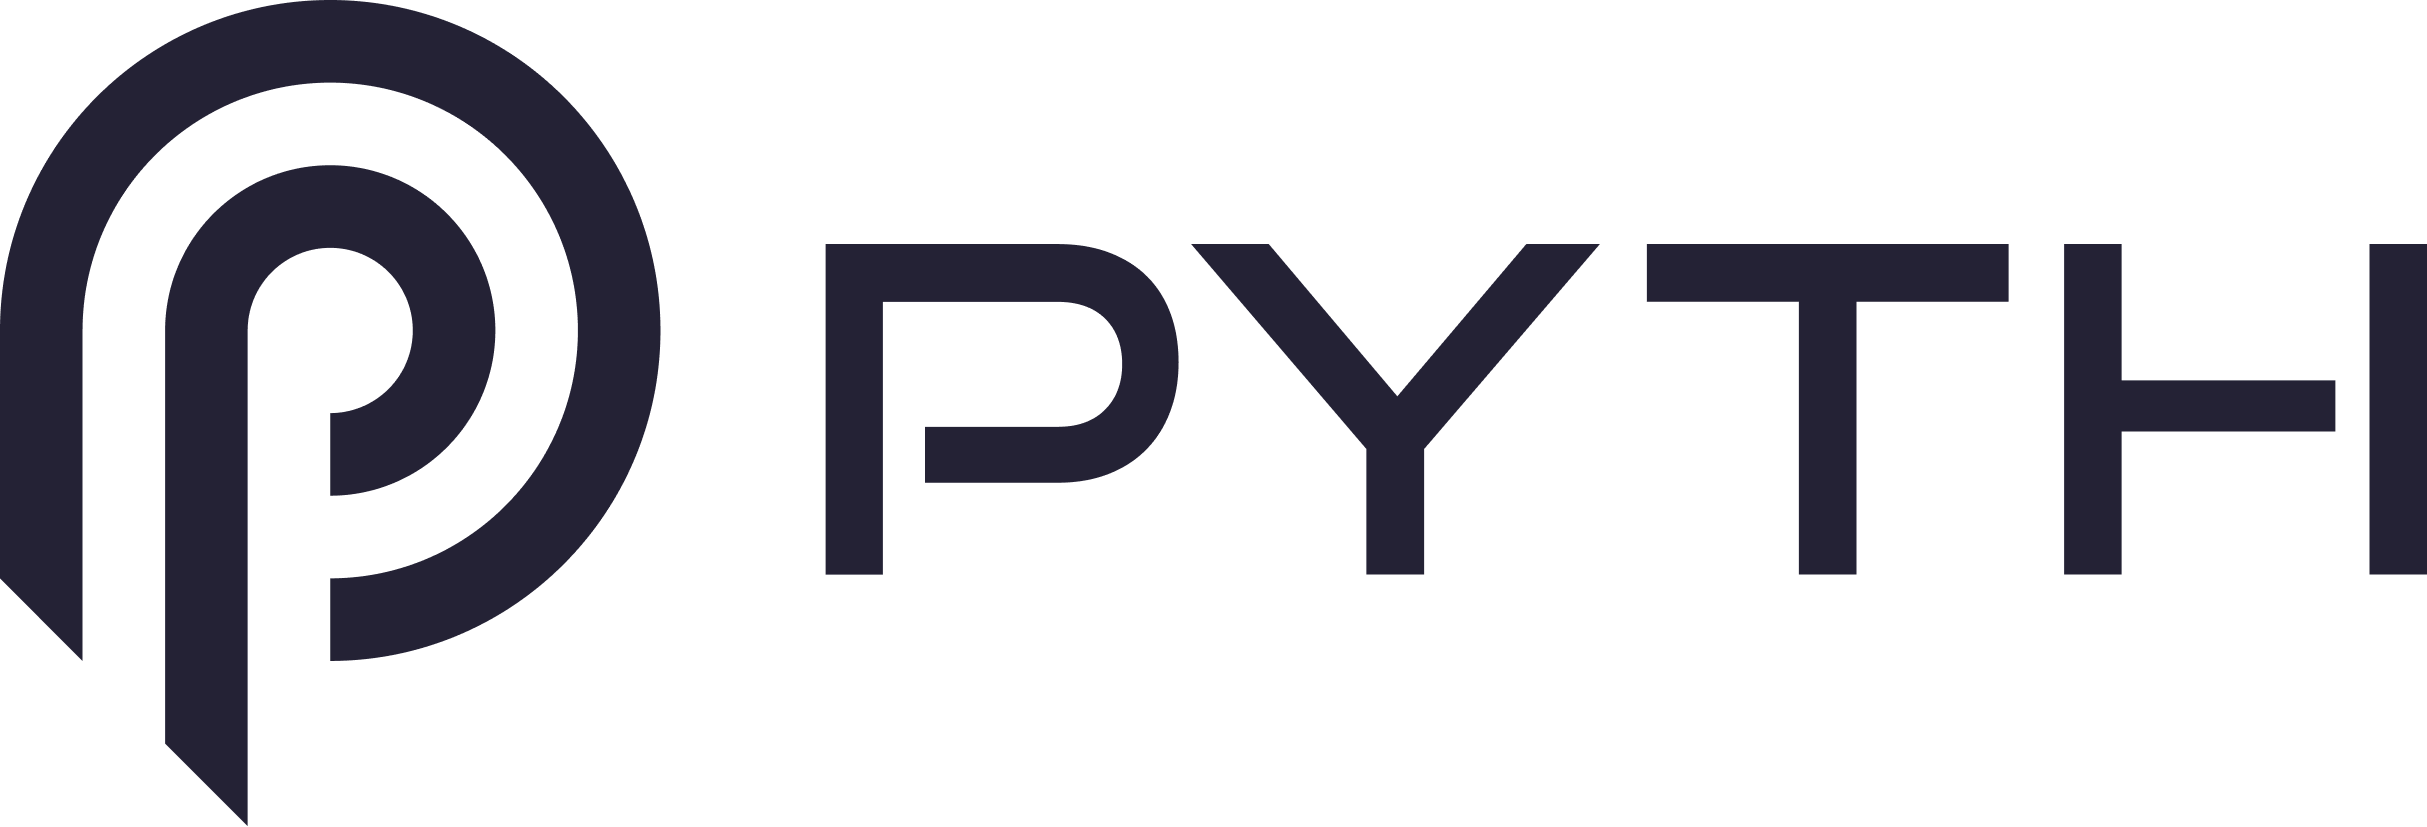 Hvad er Pyth Network? $PYTH - Asia Crypto i dag